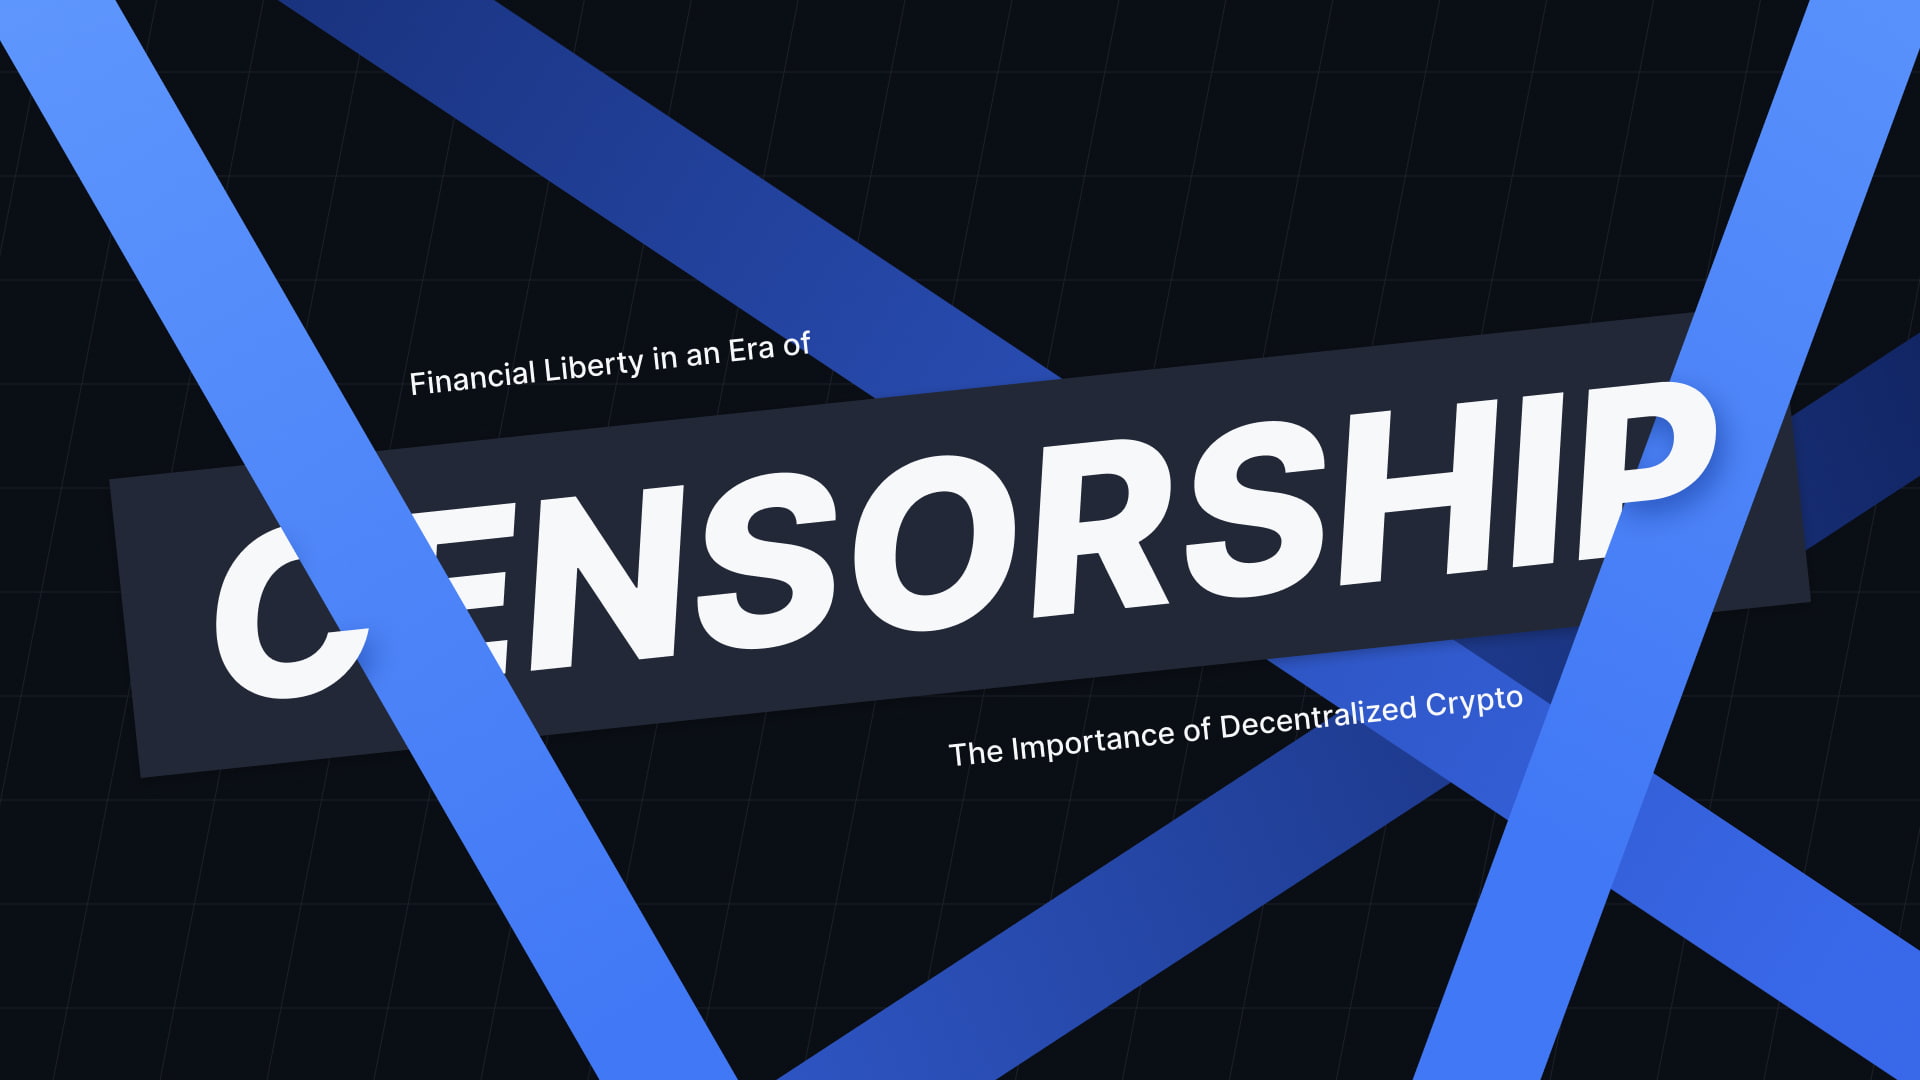 Financial Liberty in an Era of Censorship